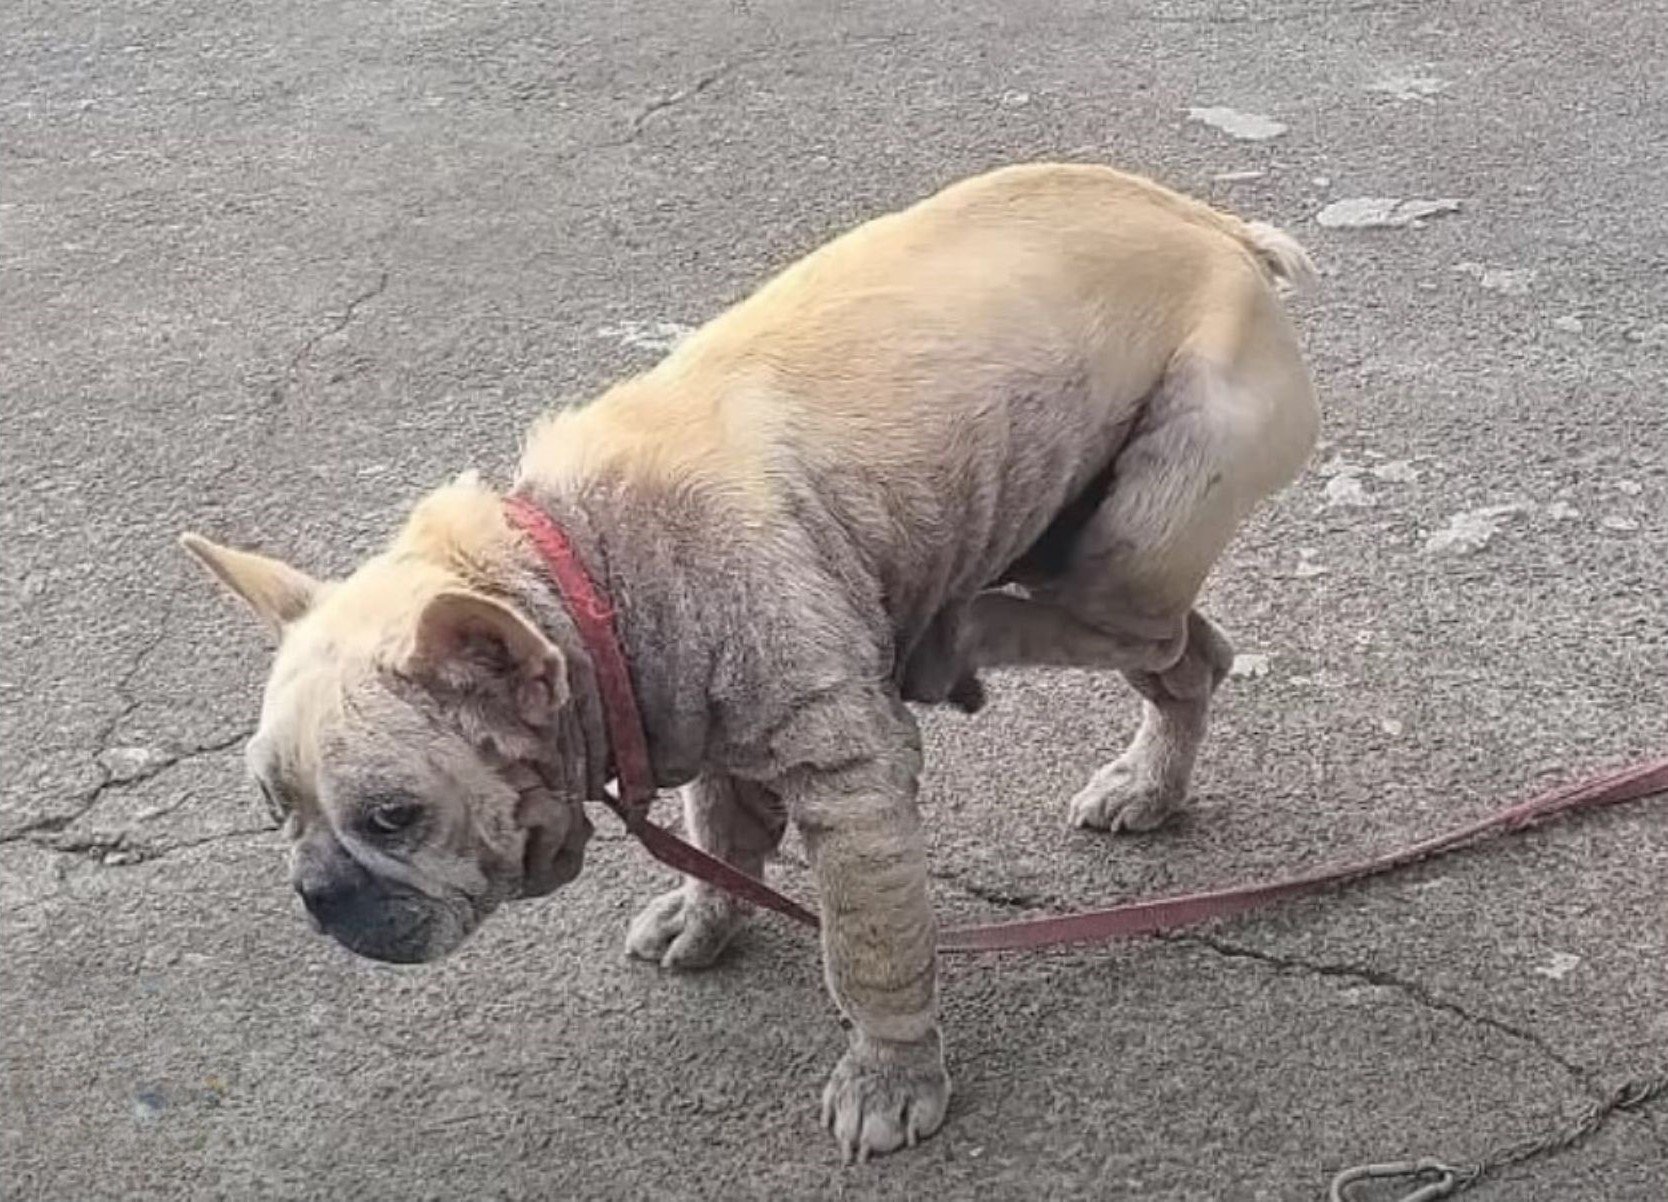 dog on the street